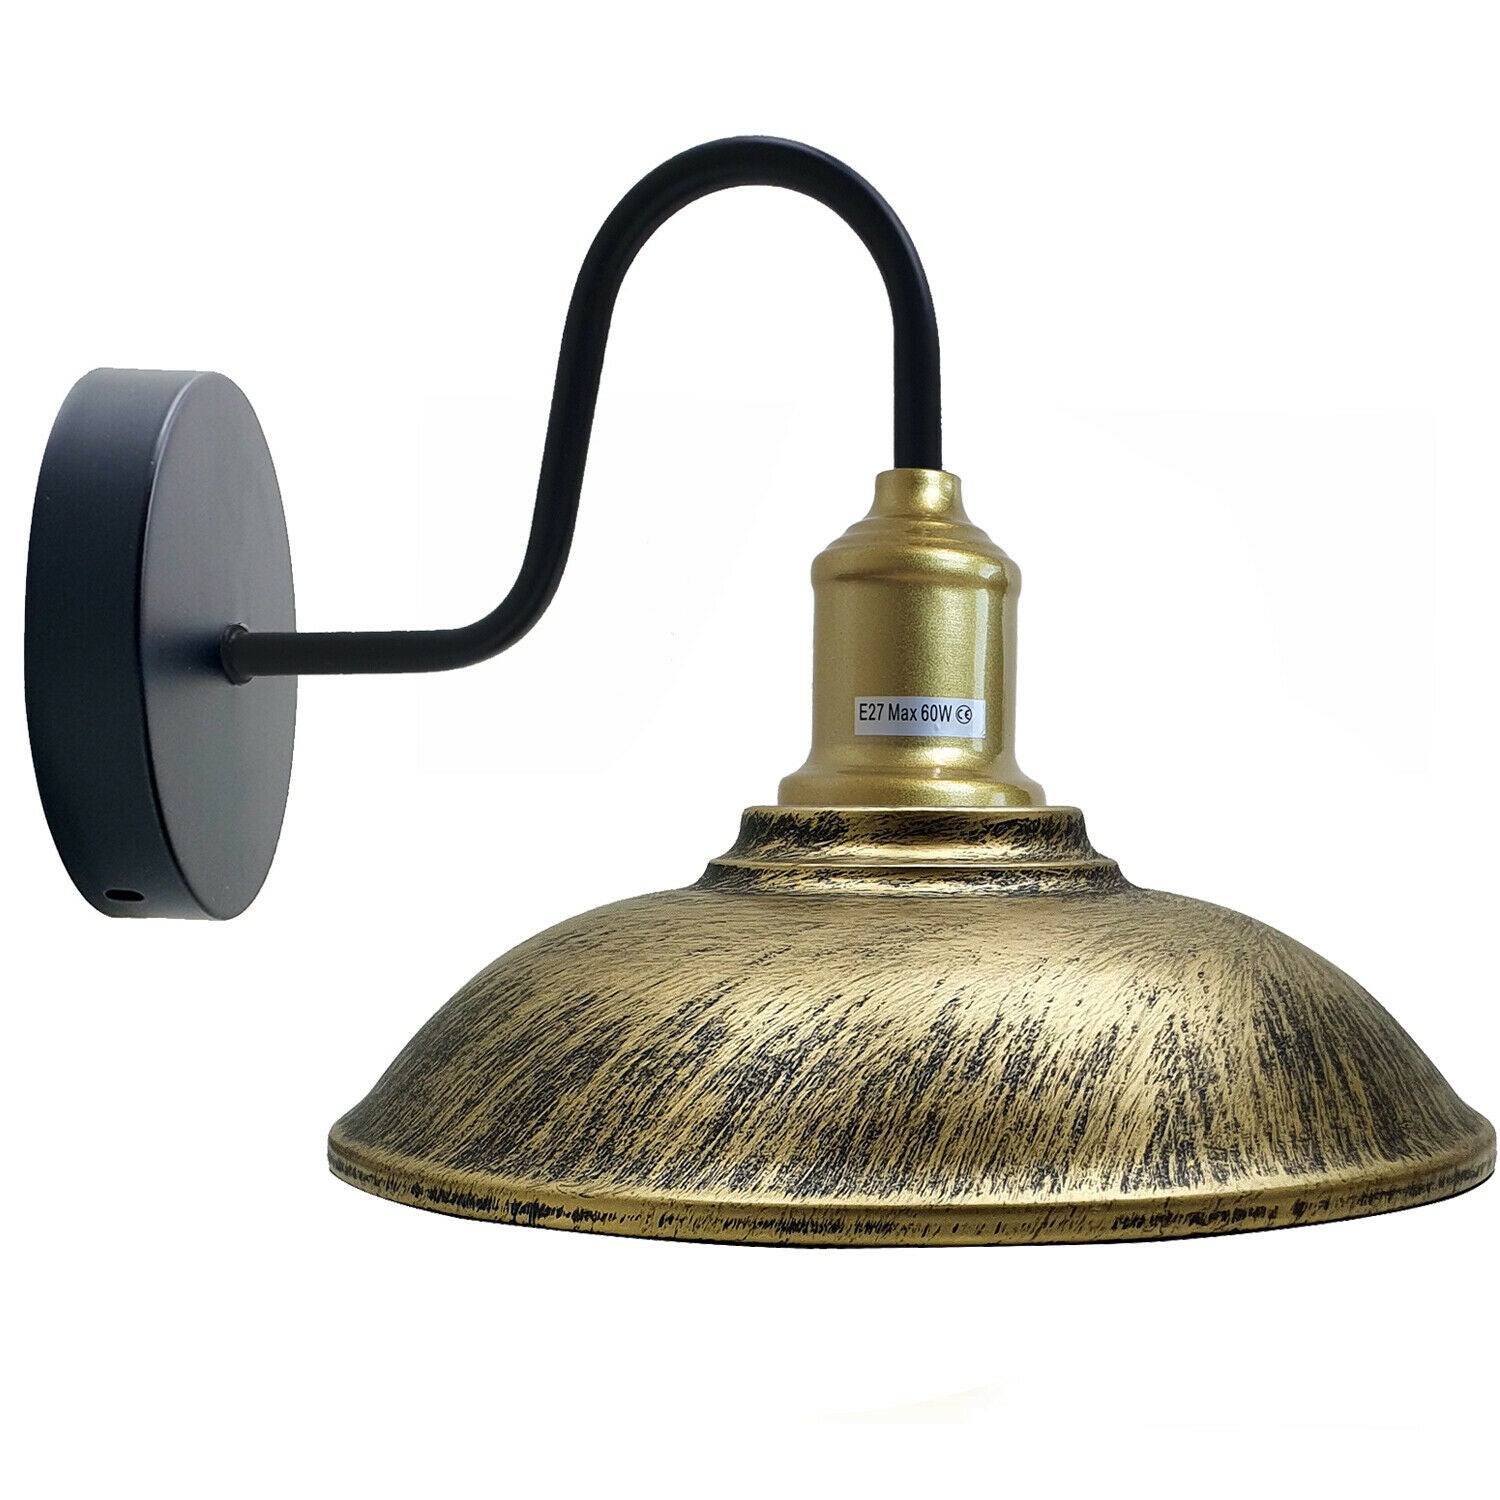 Bowl Shape Modern Vintage Retro Rustic Sconce Wall Light Lamp Fitting Fixture~1793 - LEDSone UK Ltd